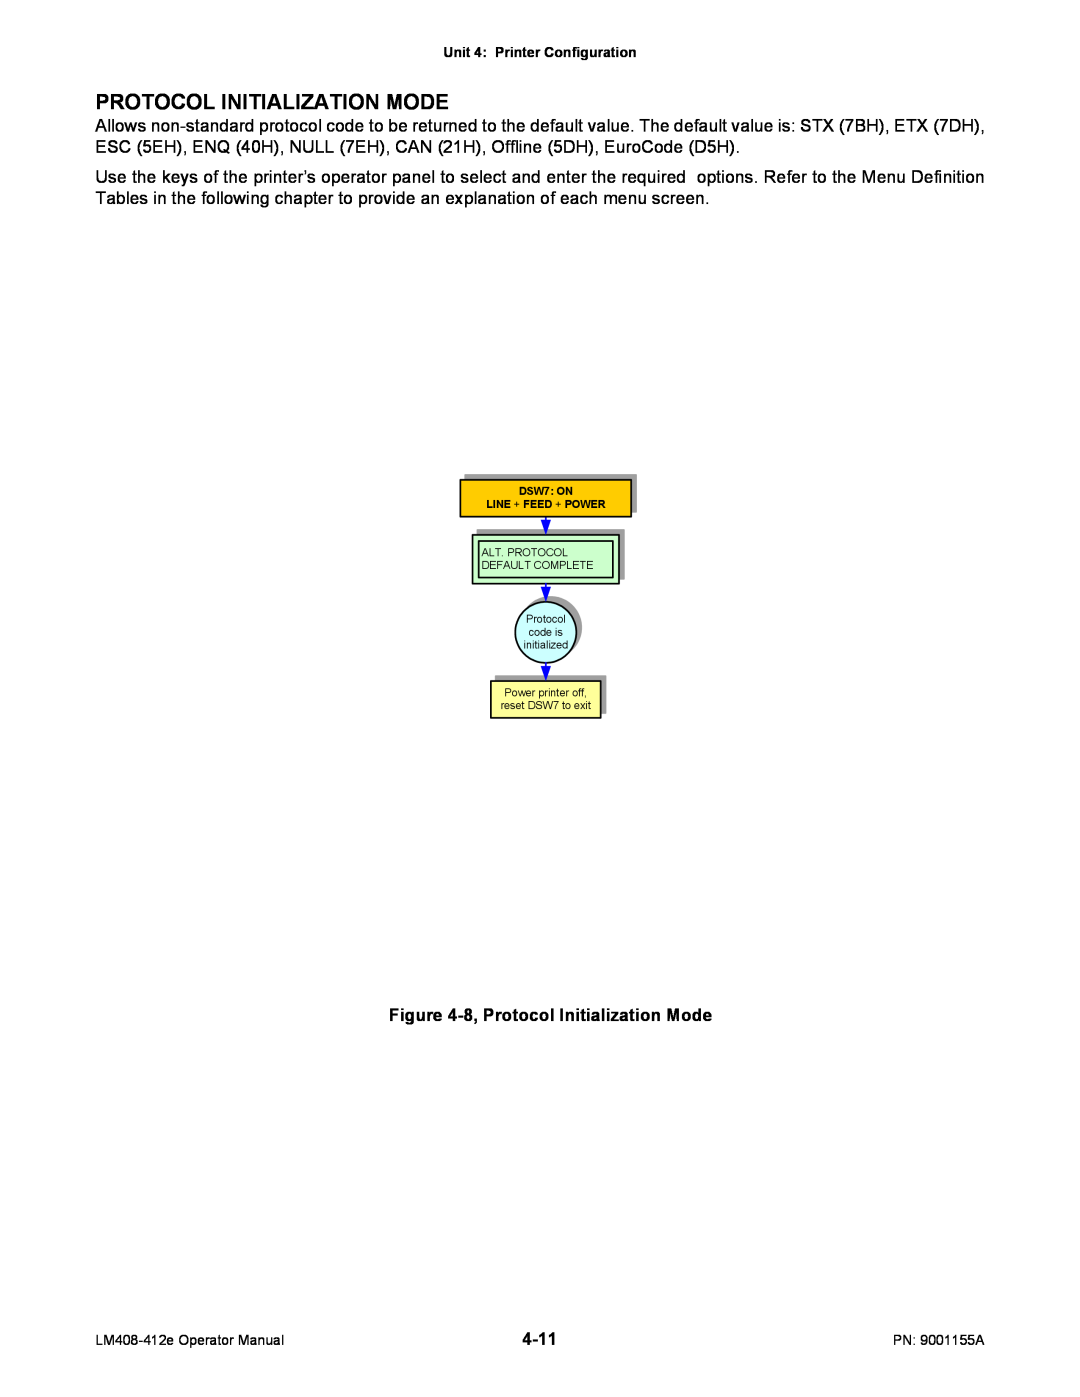 SATO LM408/412E manual 8, Protocol Initialization Mode, 4-11 